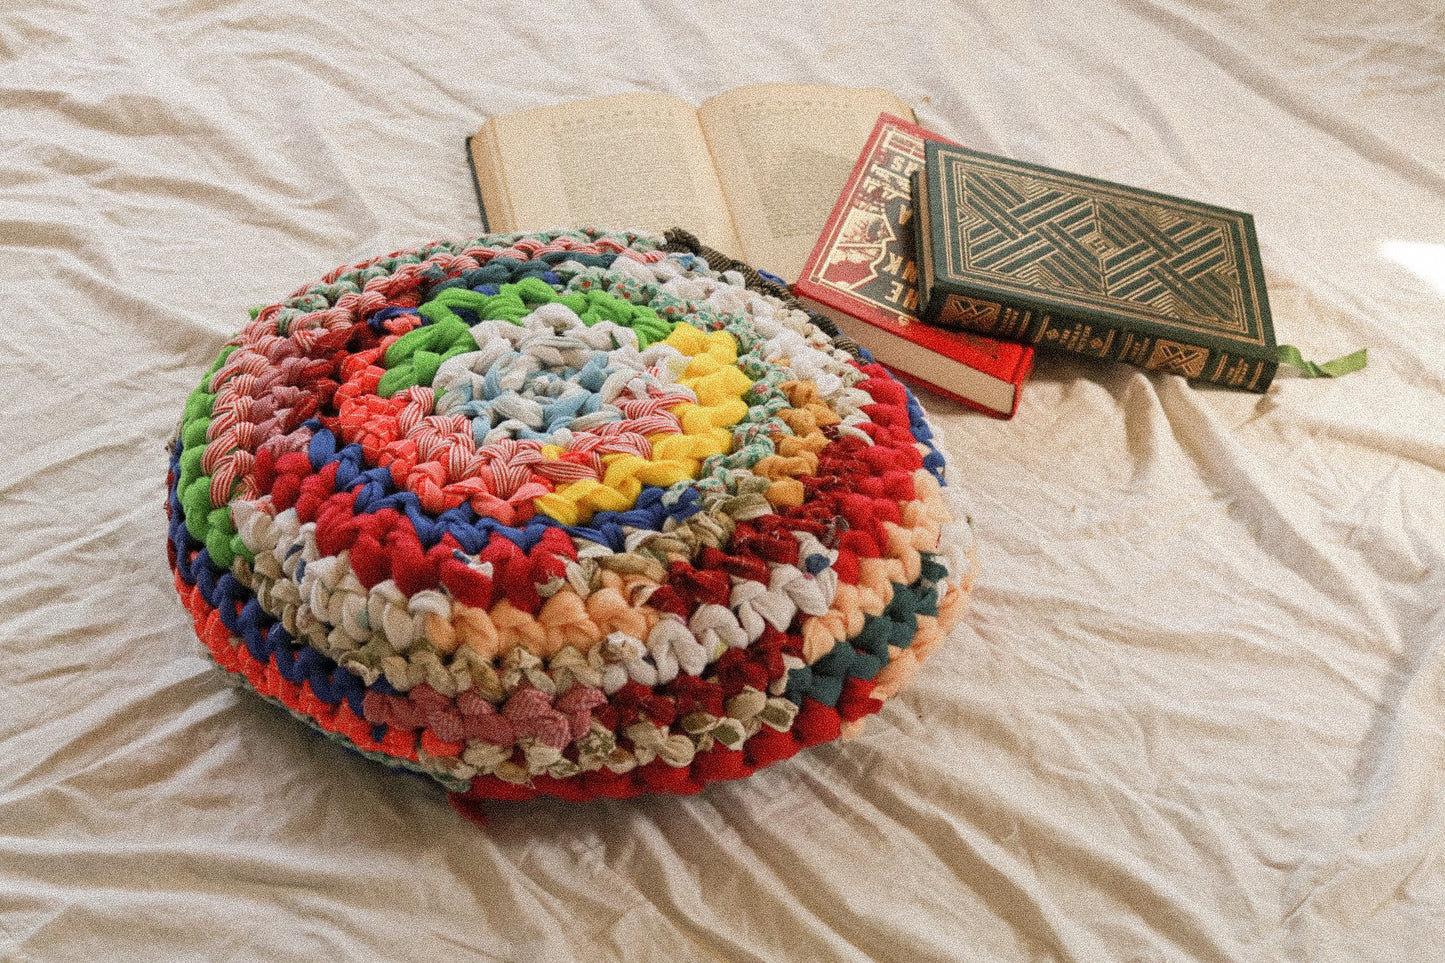 Crochet Snake Seat Cushion, Chair Cushion – GoldenLucyCrafts